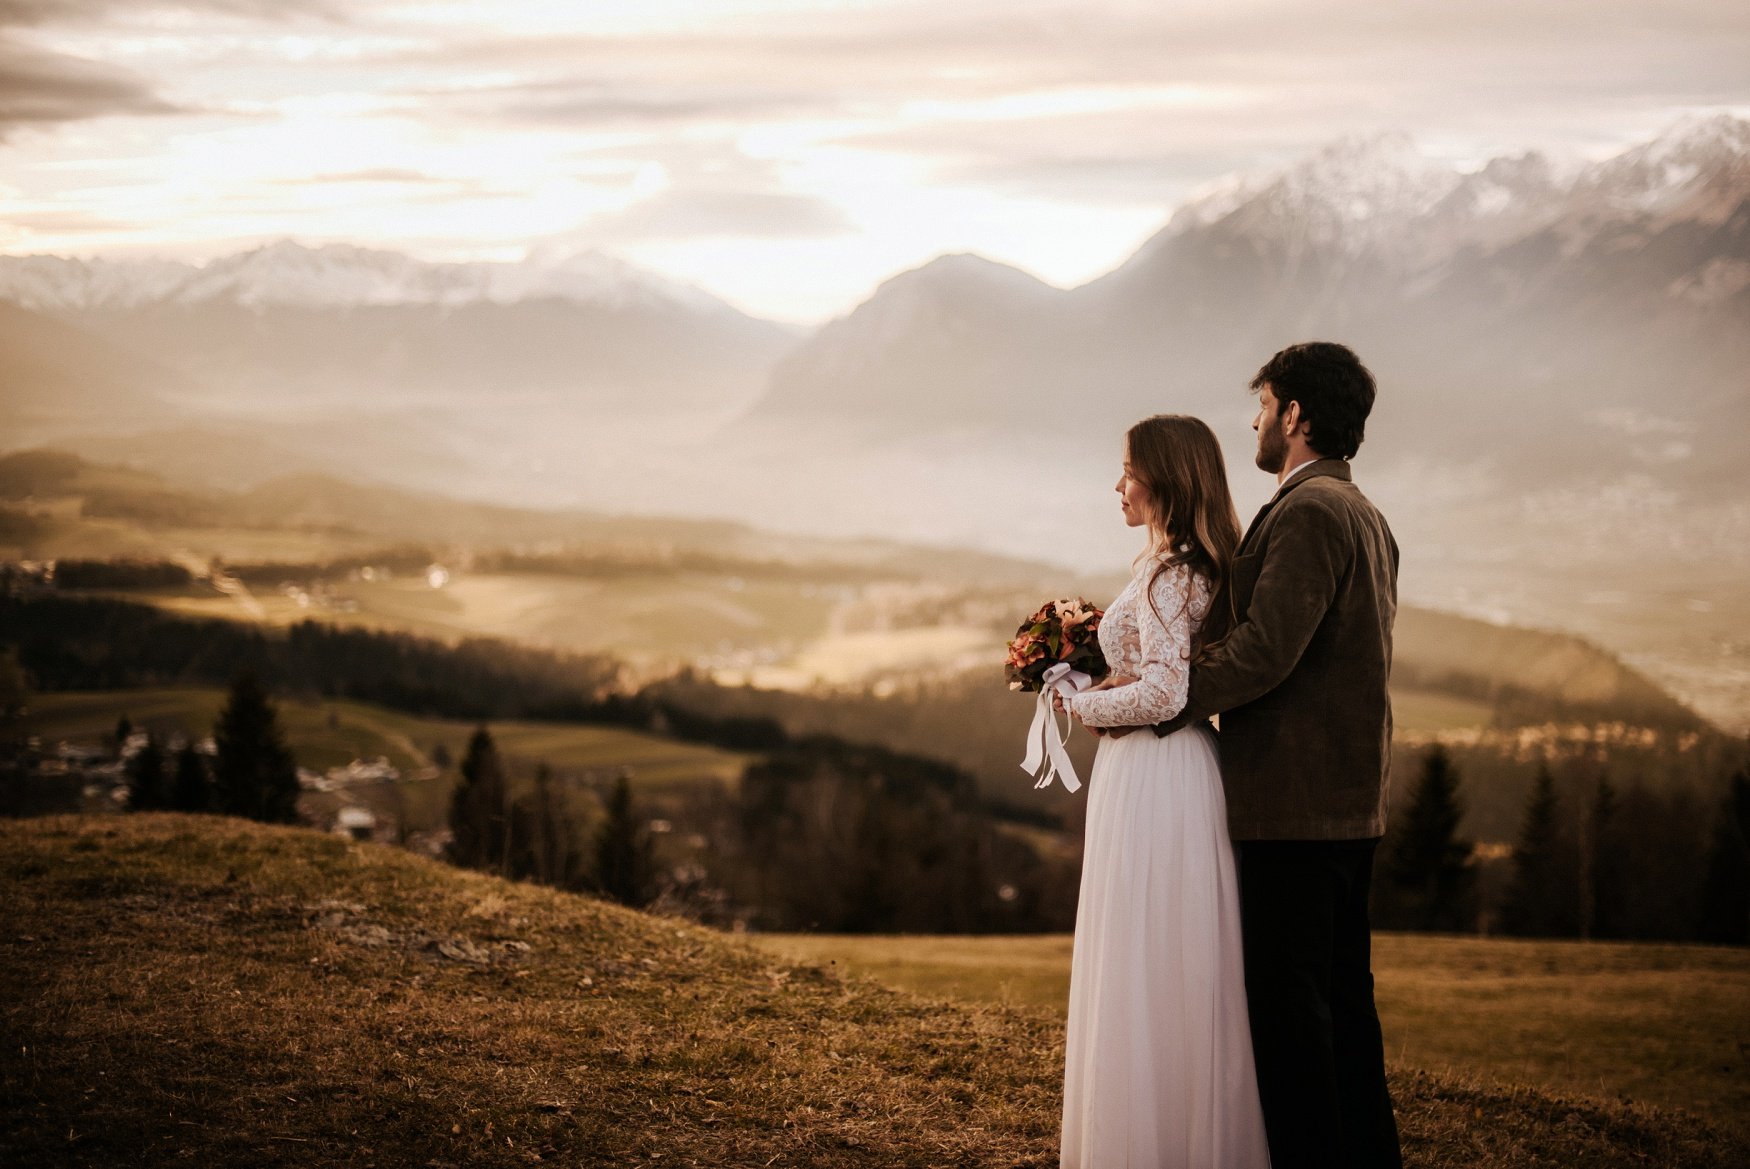 bestof2016_015 innsbruck wedding austrian alps.jpg